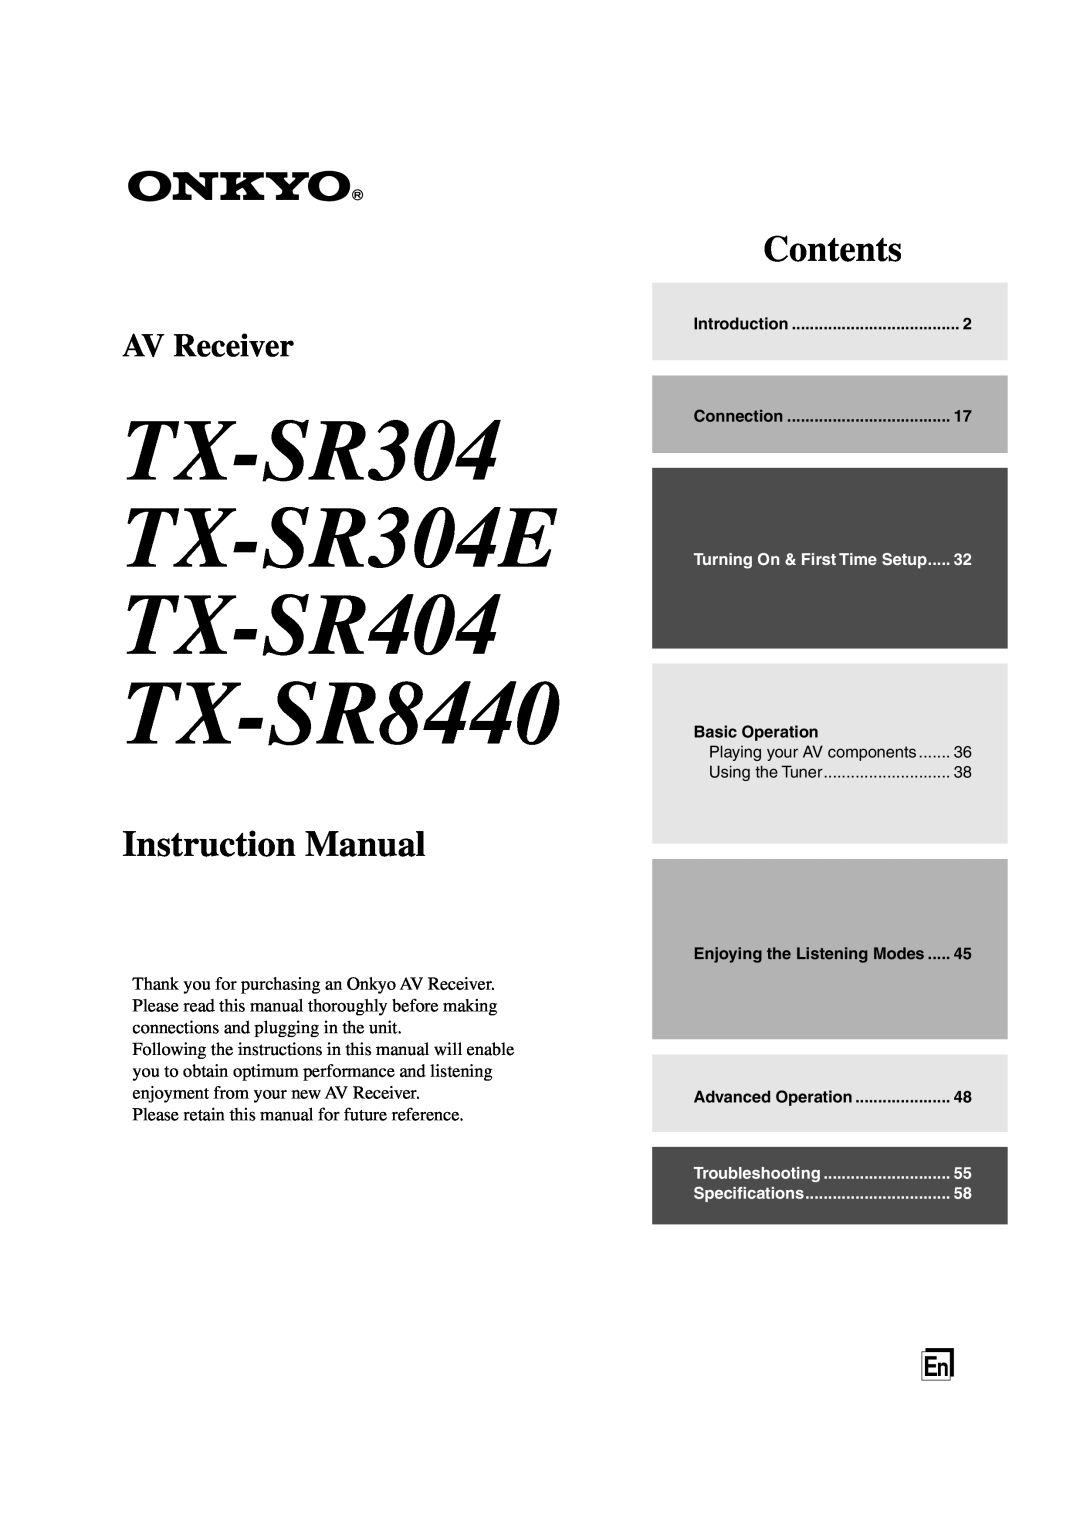 Onkyo instruction manual TX-SR8440, TX-SR304 TX-SR304E TX-SR404, Contents, AV Receiver 